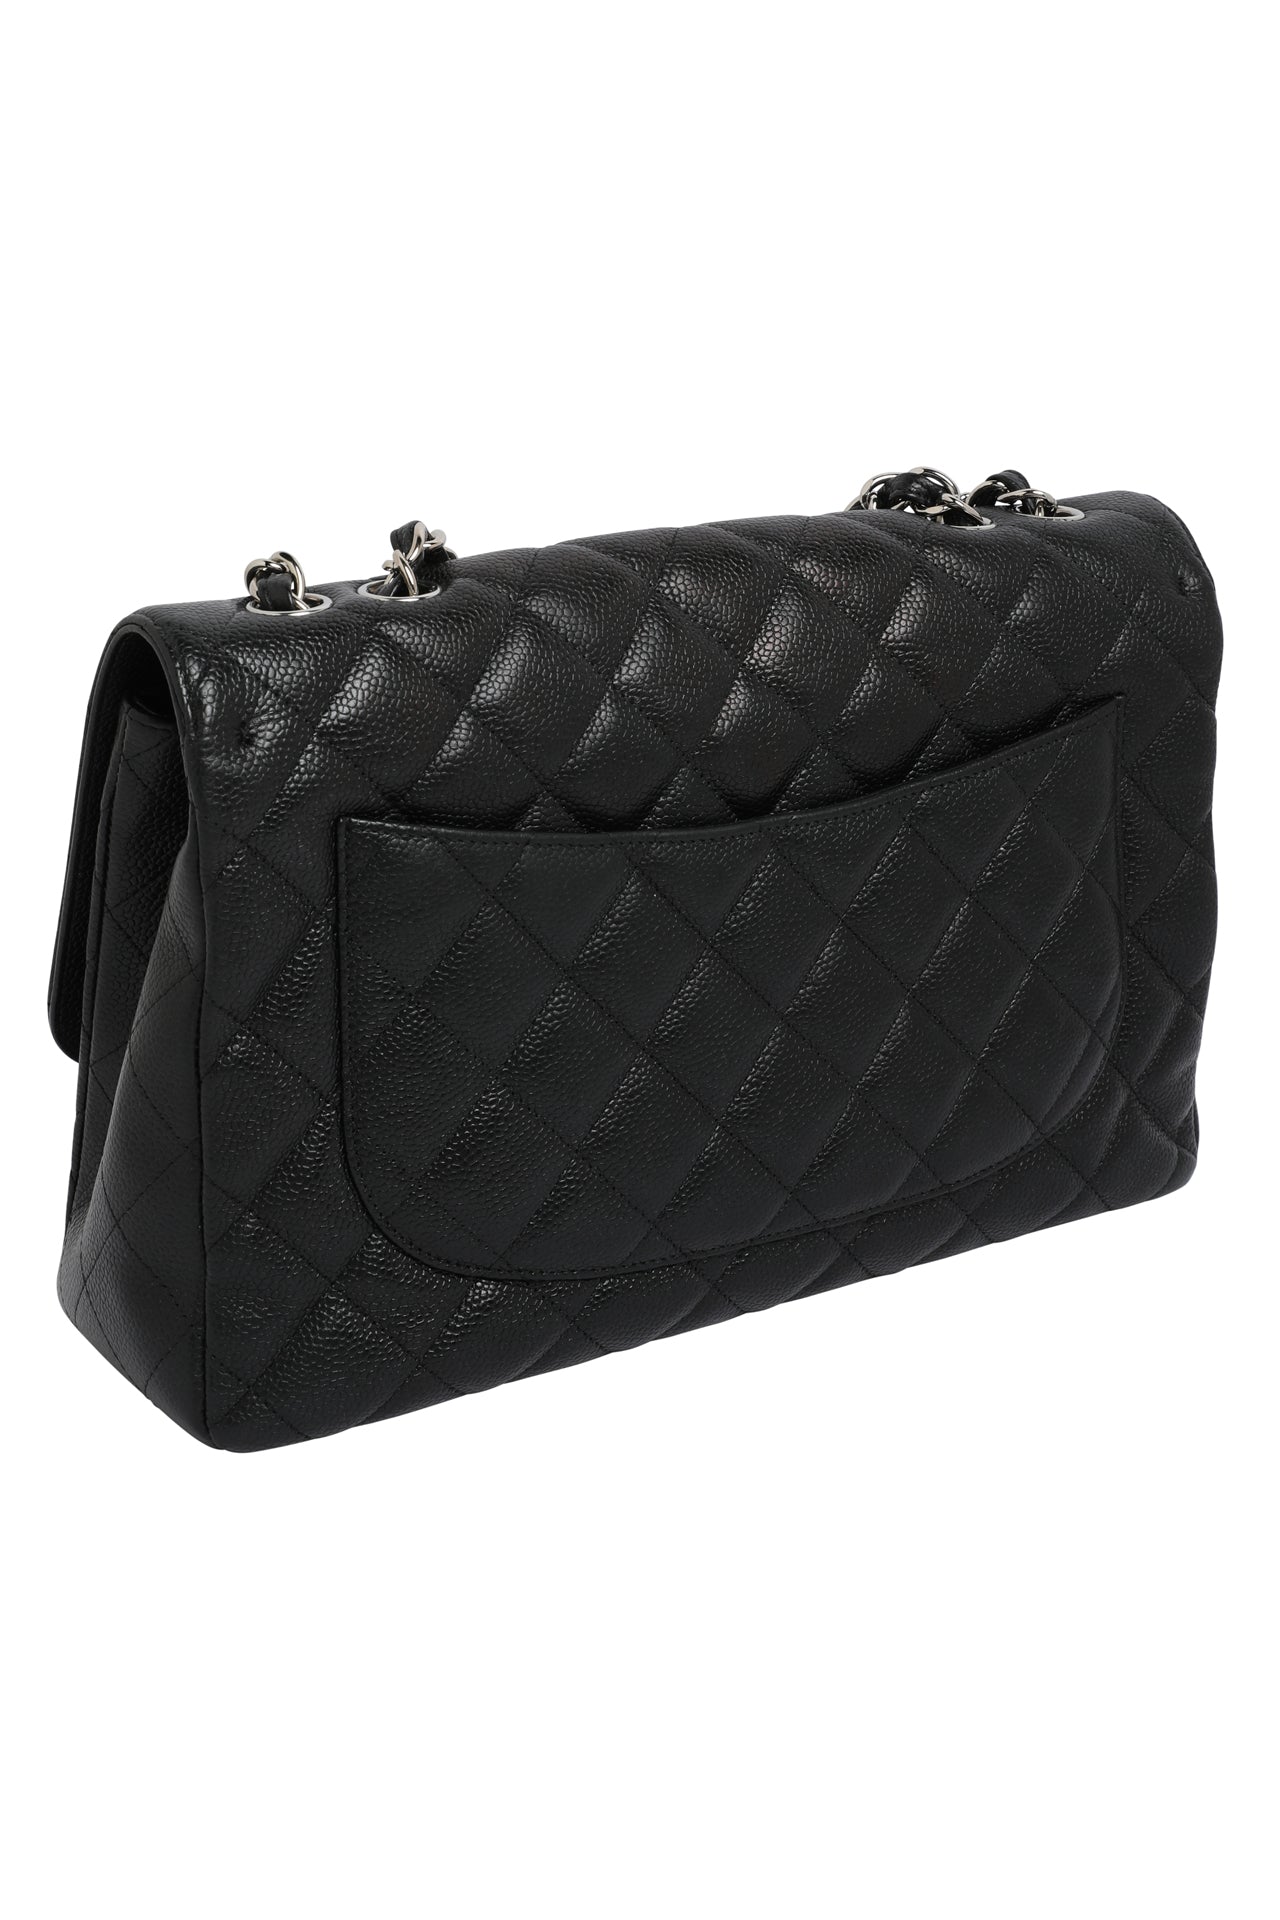 Chanel Caviar Quilted Single Flap Bag Jumbo